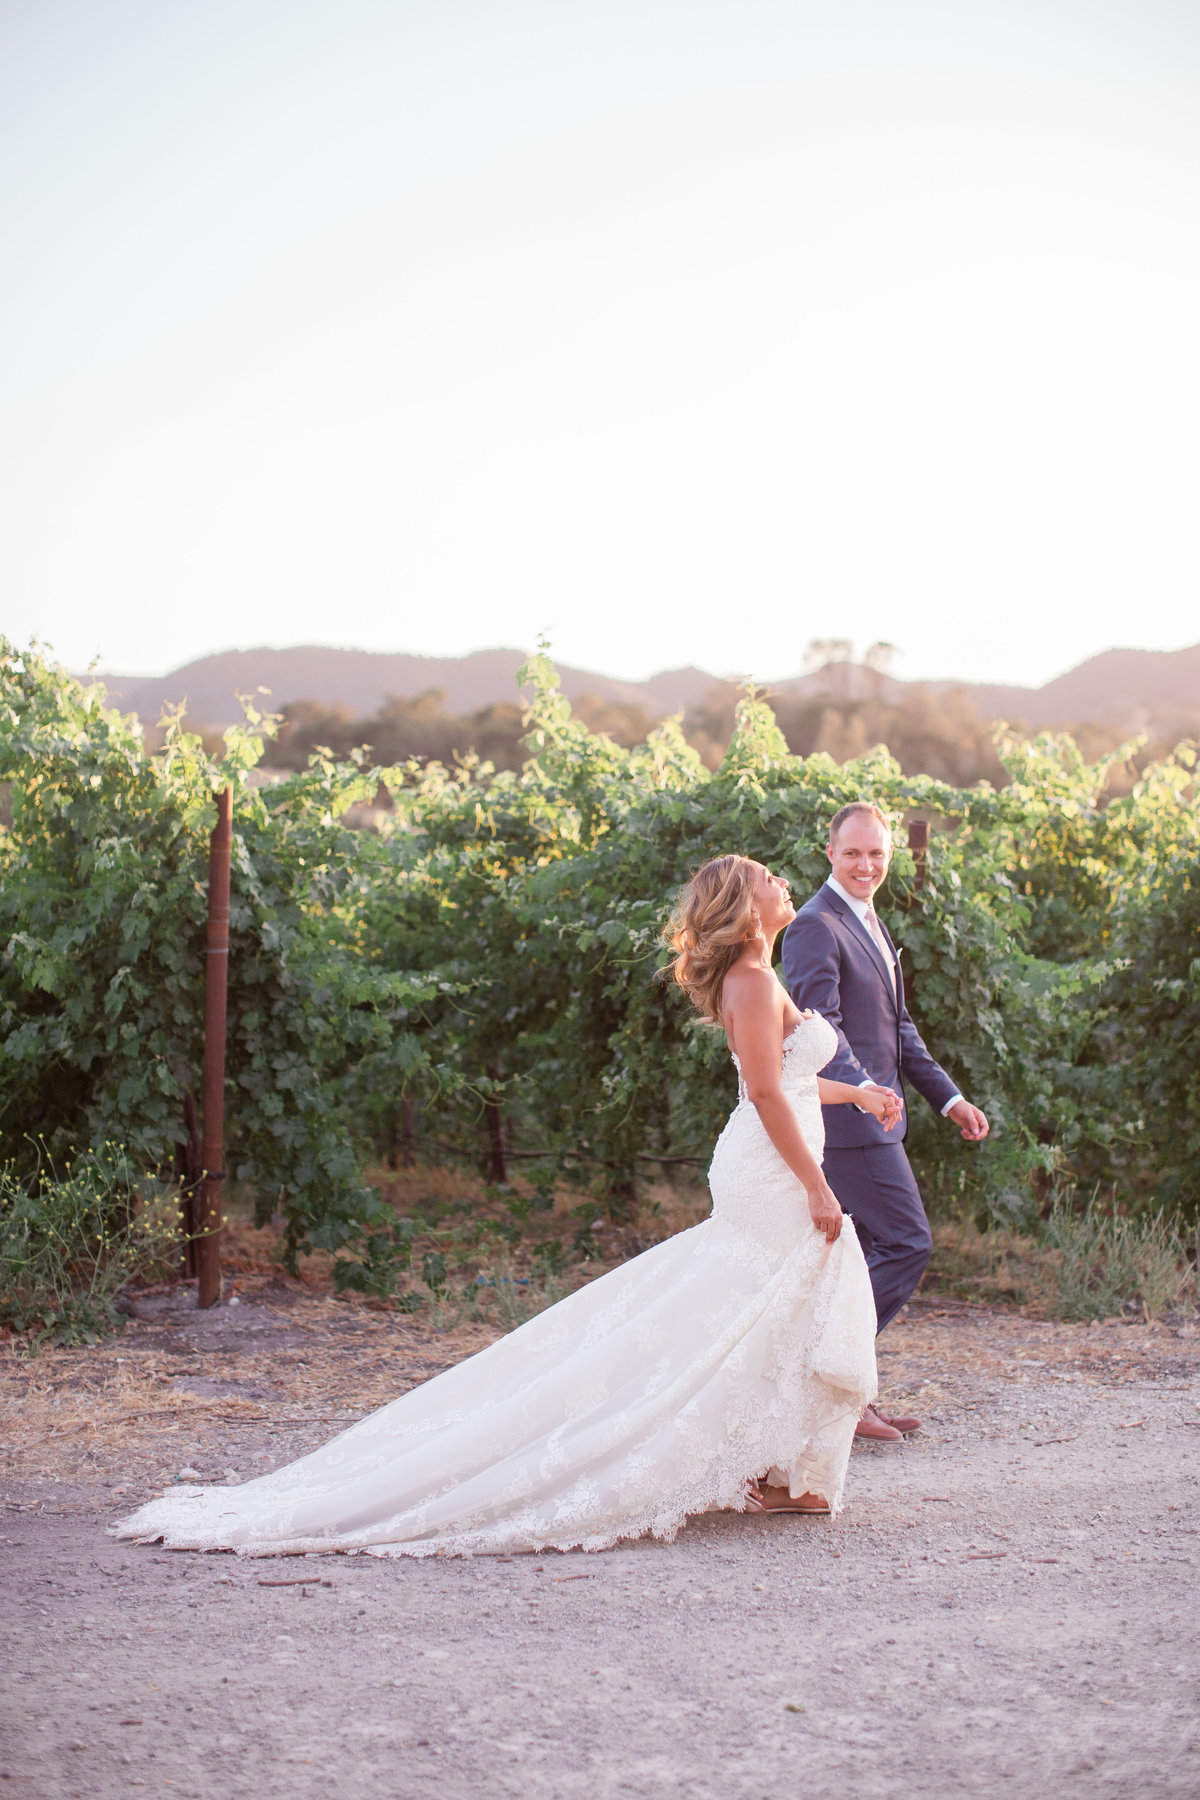 Jenna & Andrew's Oyster Ridge Wedding | Paso Robles Wedding Photographer | Katie Schoepflin Photography562